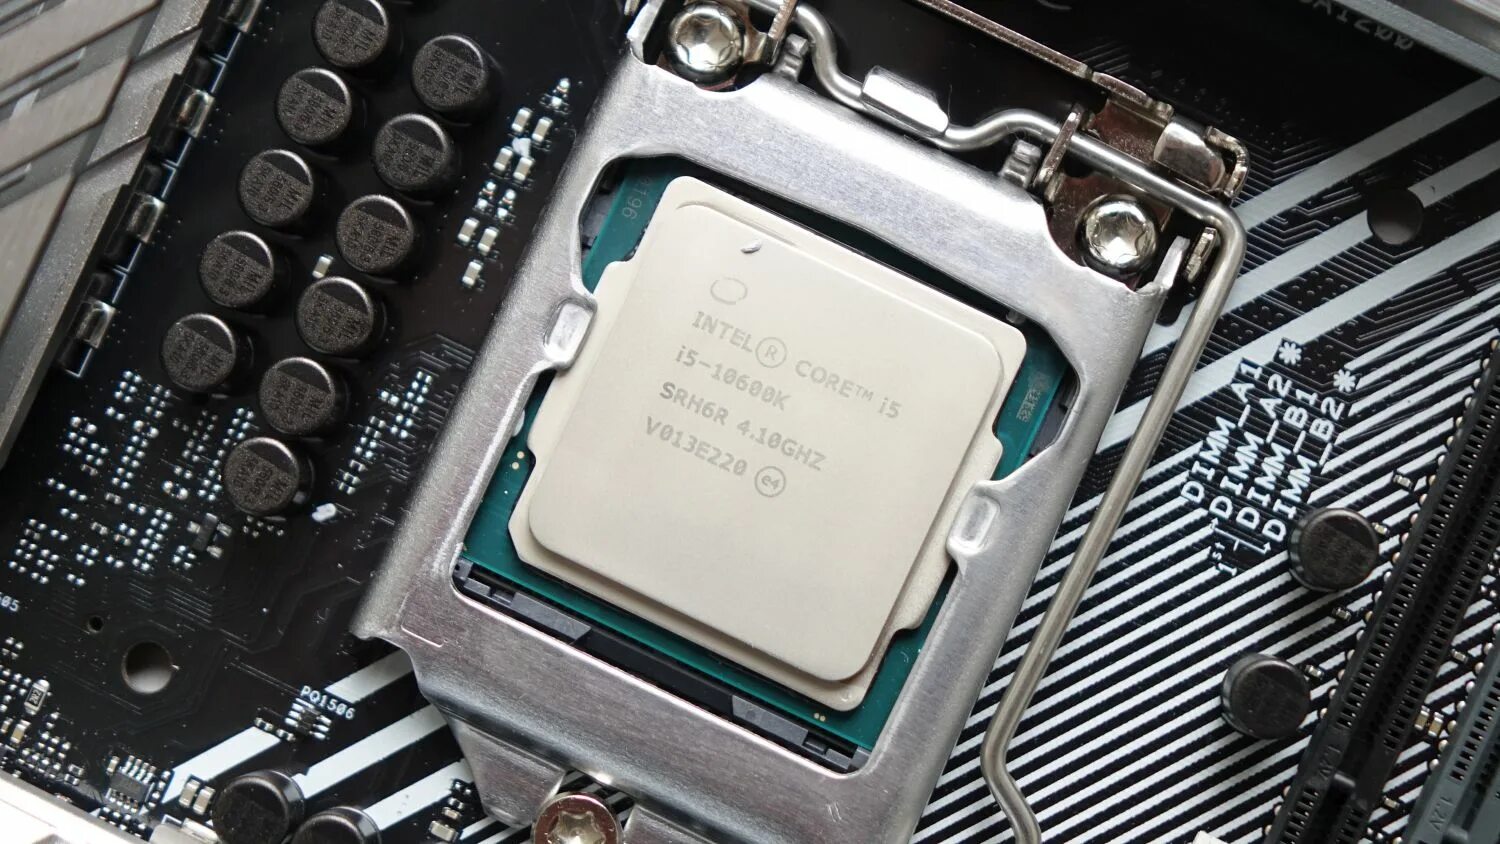 Core i5 10600k. Процессор Intel Core i5-10600k. Процессор Intel Core i5-10600k OEM. Intel Core i5-10600k Box. 12600f